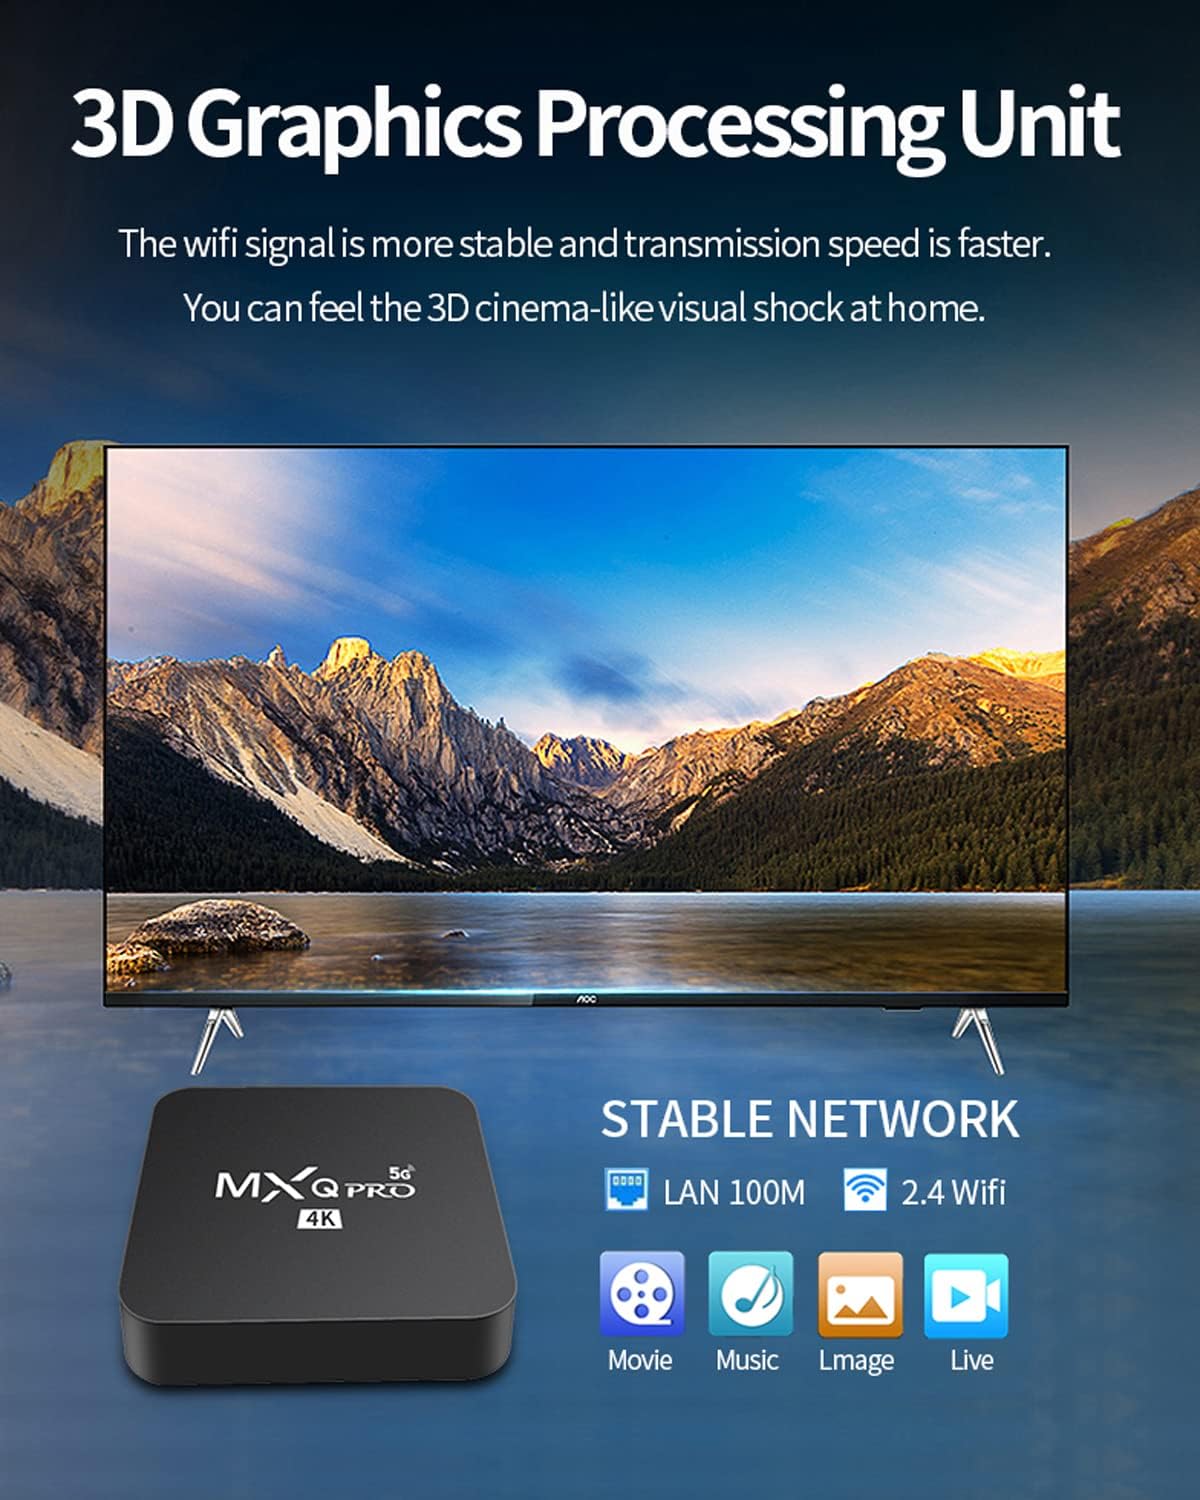 MXQ Pro Android TV BOX